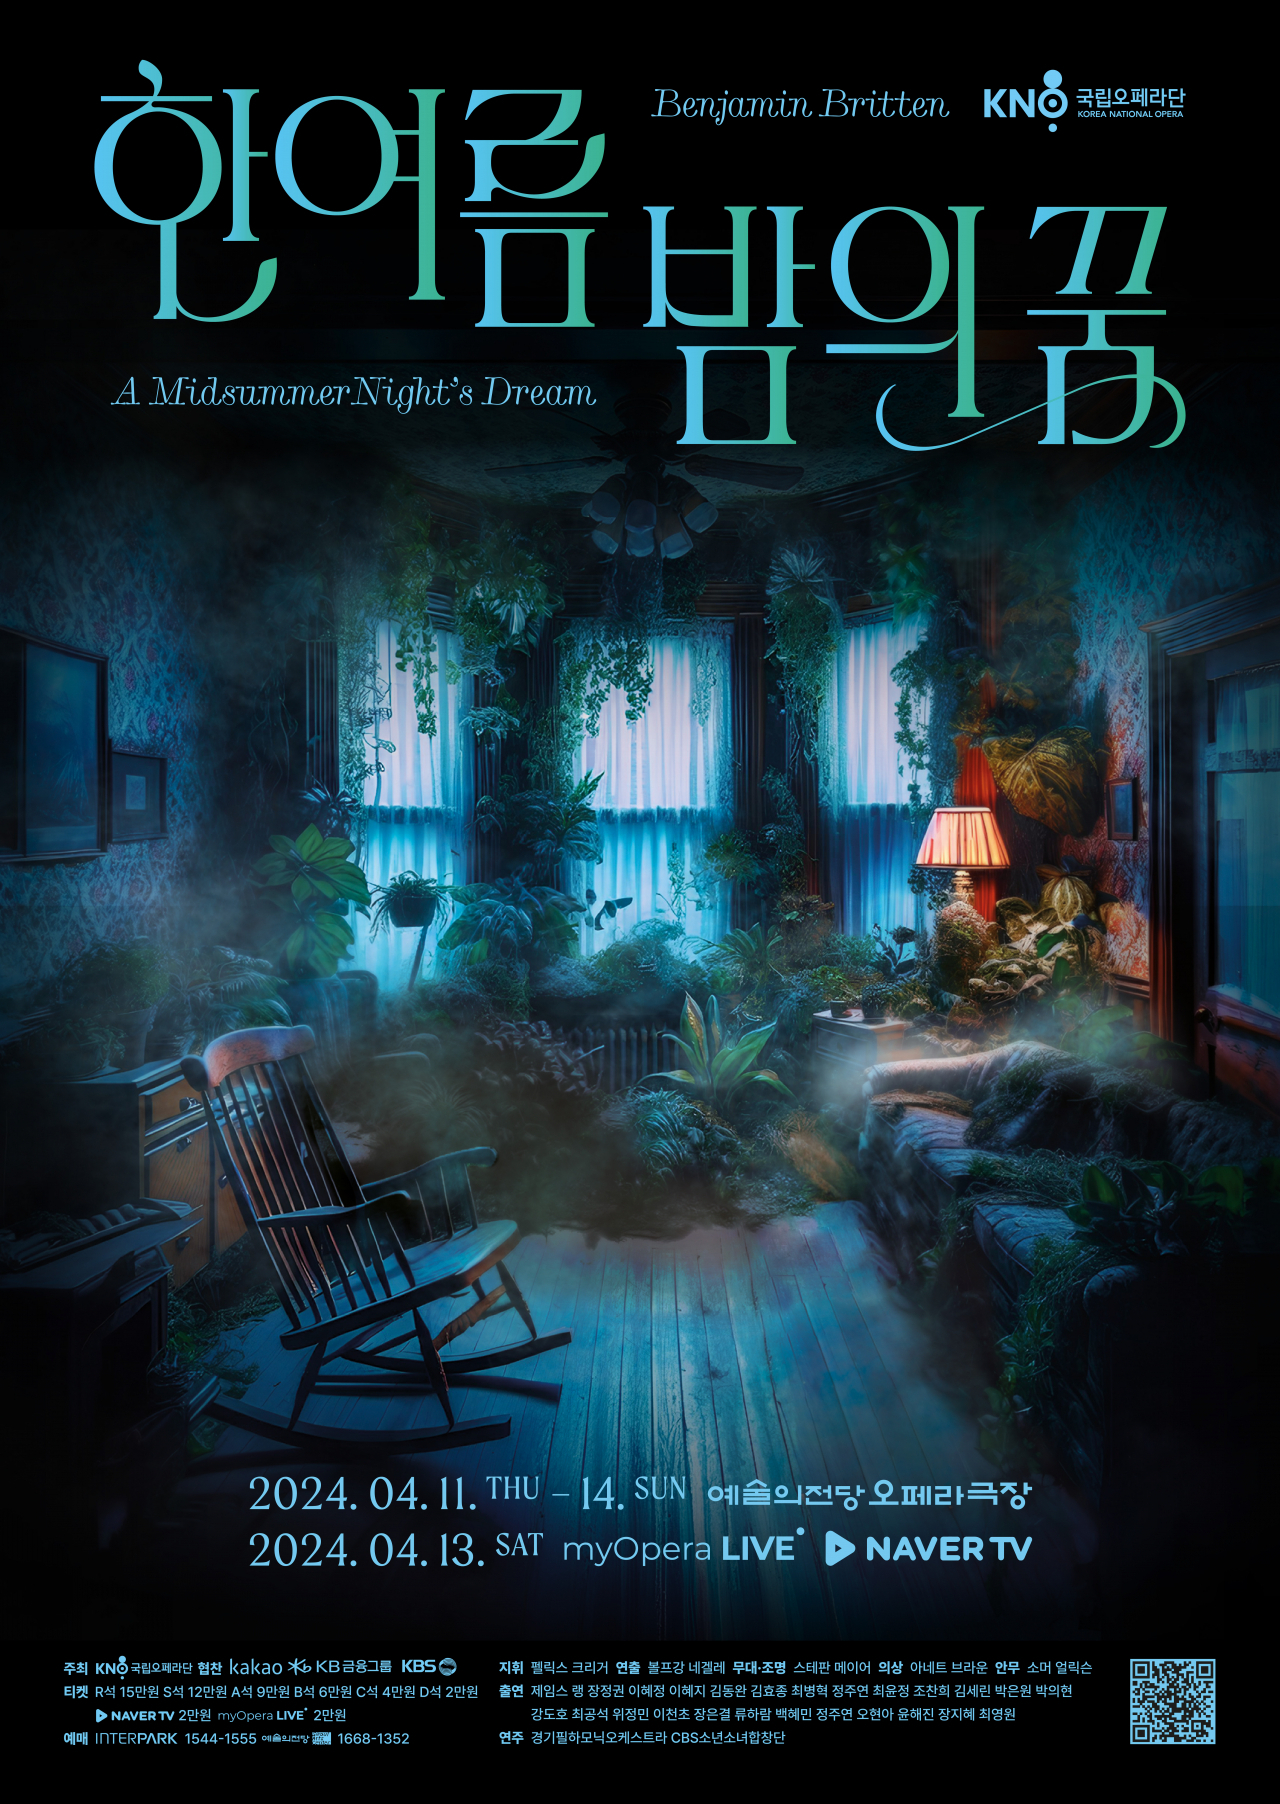 Poster for the Korea National Opera's 